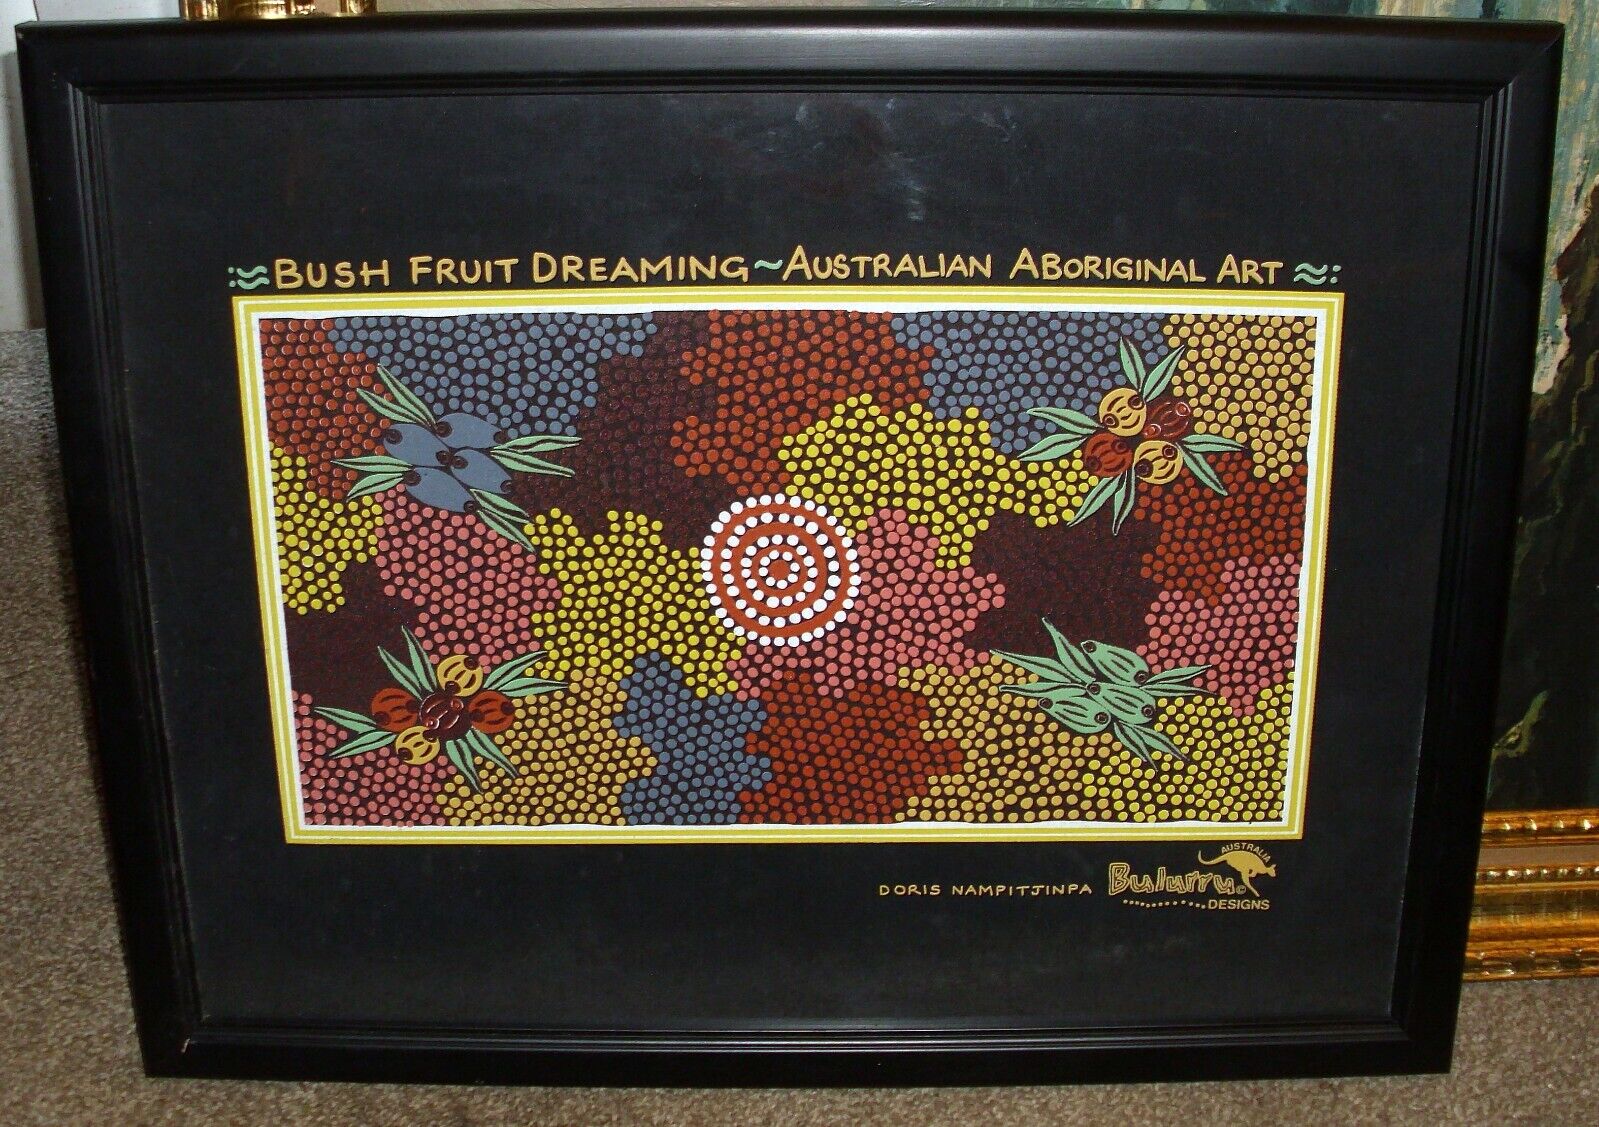 BUSH FRUIT DREAMING BY DORIS NAMPITJINPA AUSTRALIAN ABORIGINAL ART CANVAS FRAMED